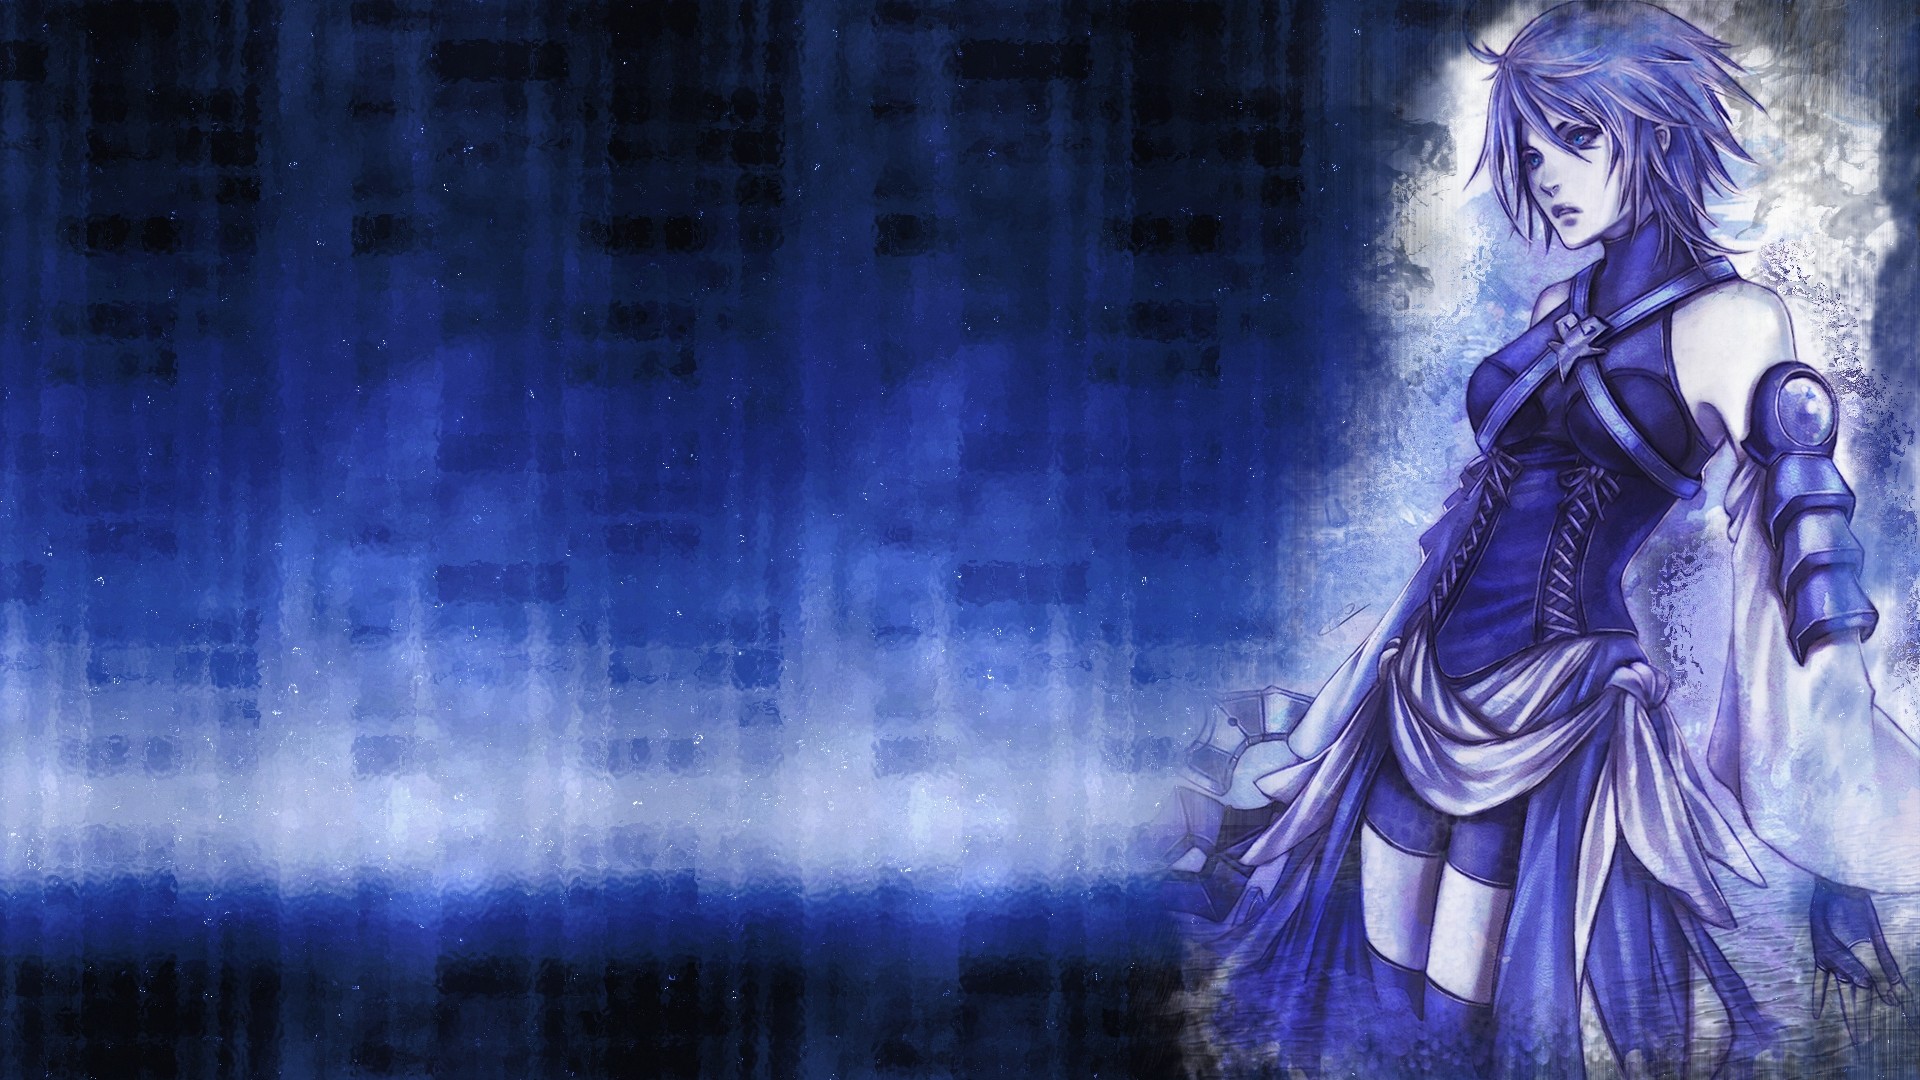 1920x1080 ... download Kingdom Hearts: Birth by Sleep image